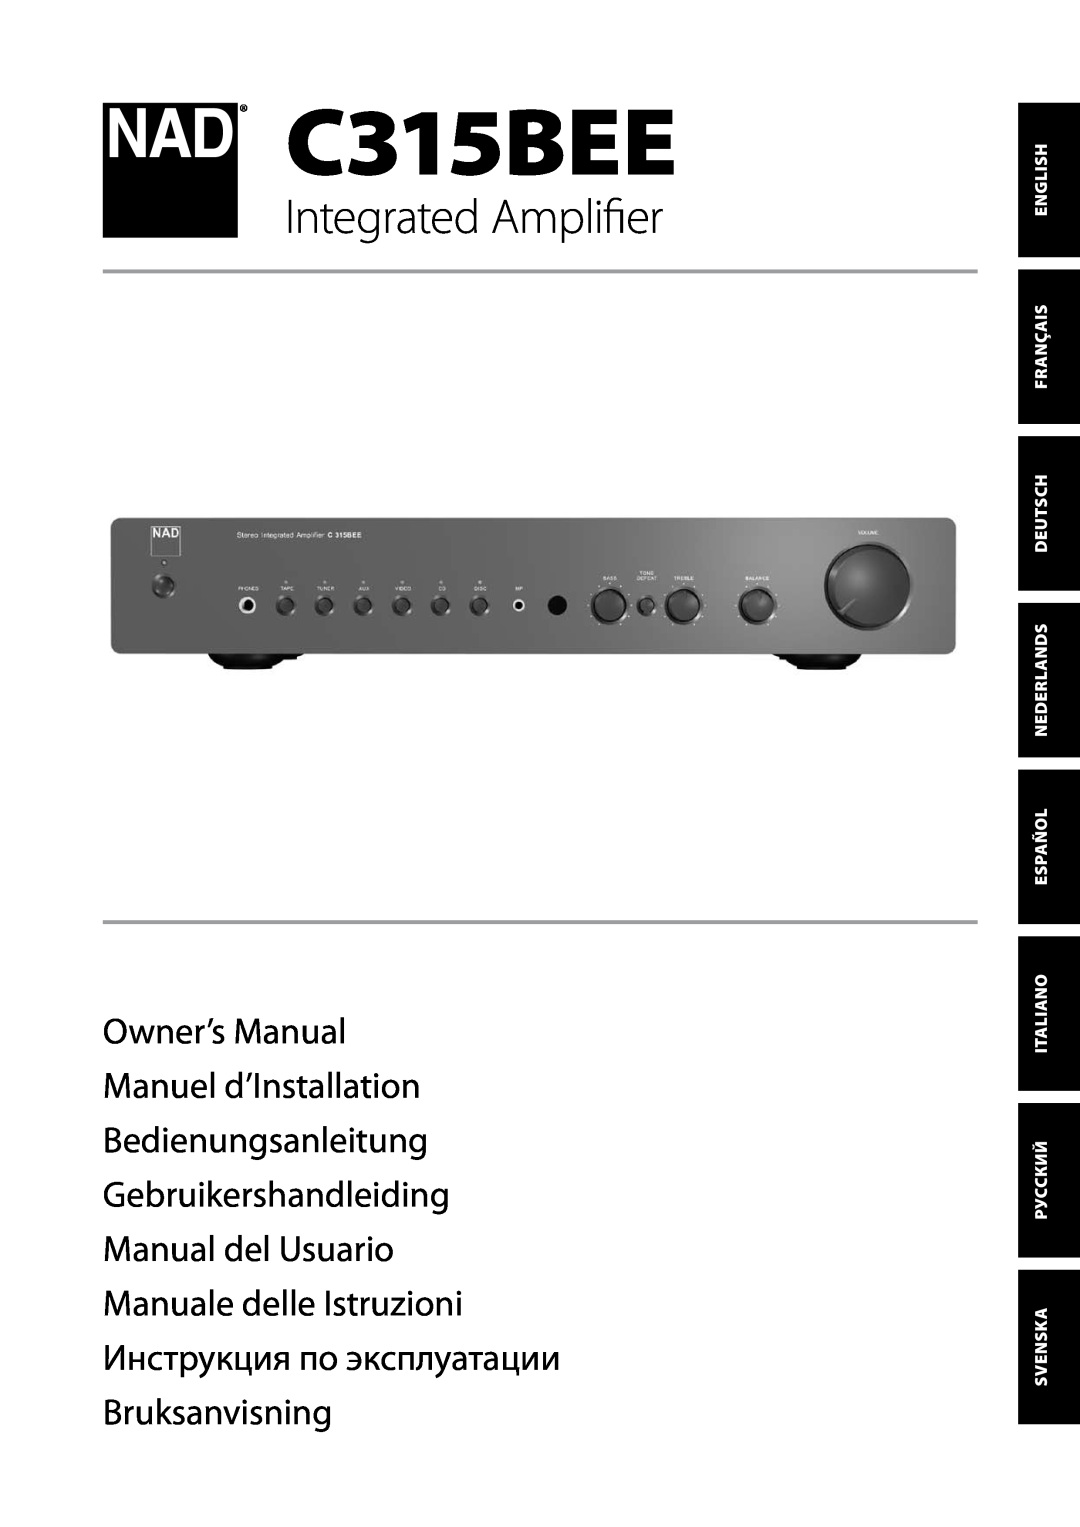 NAD C315BEE owner manual English Français Español Nederlands Deutsch, Italiano Русский Svenska, Integrated Amplifier 